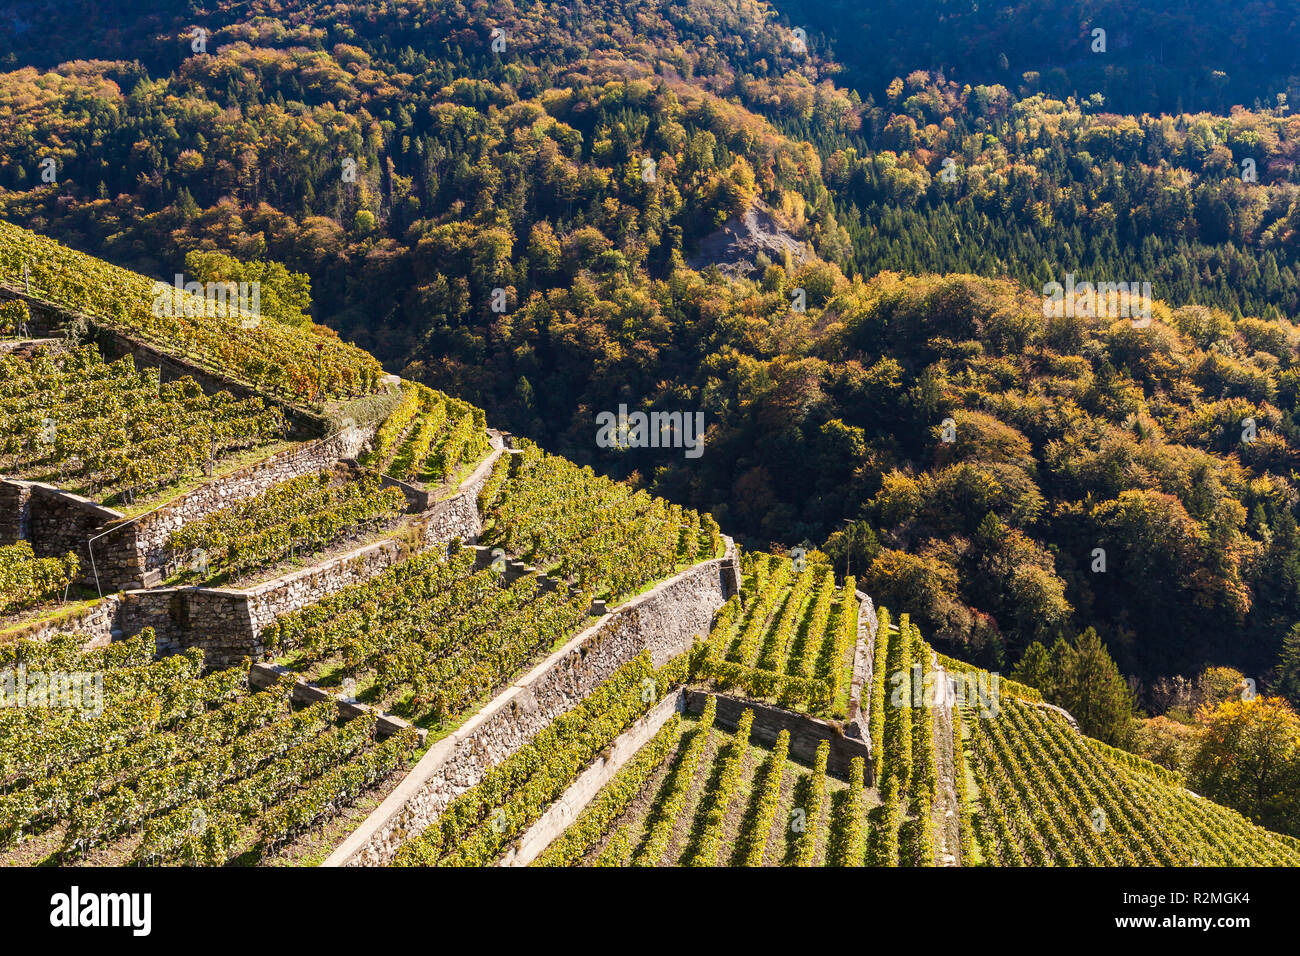 Switzerland, canton of Vaud, Rhone Valley, Aigle, vineyards, terraces, viticulture, autumn Stock Photo